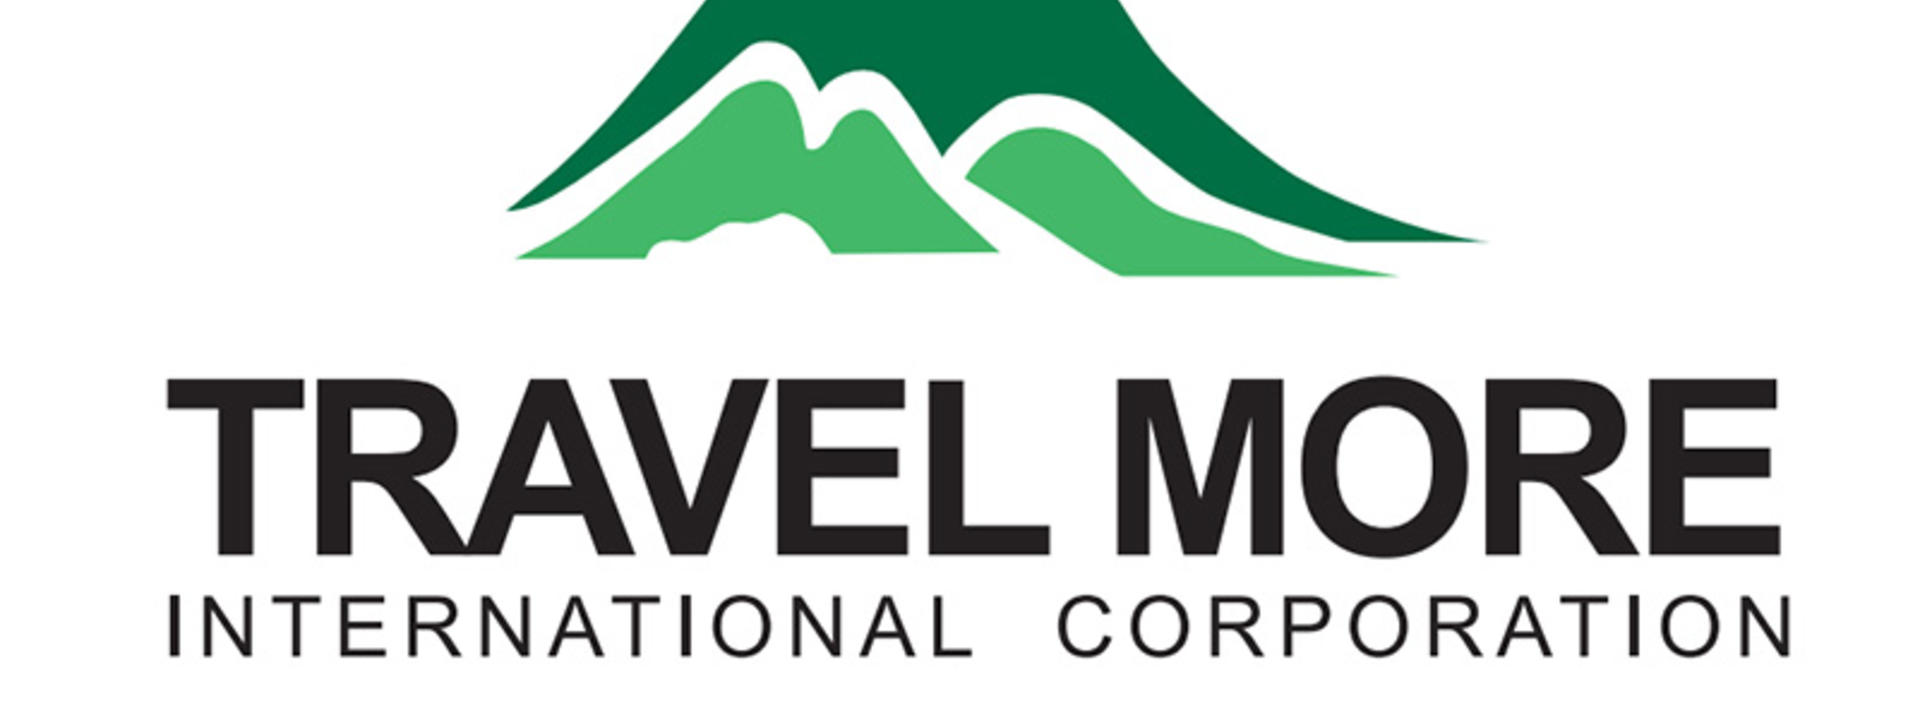 travelmore-logo.jpg